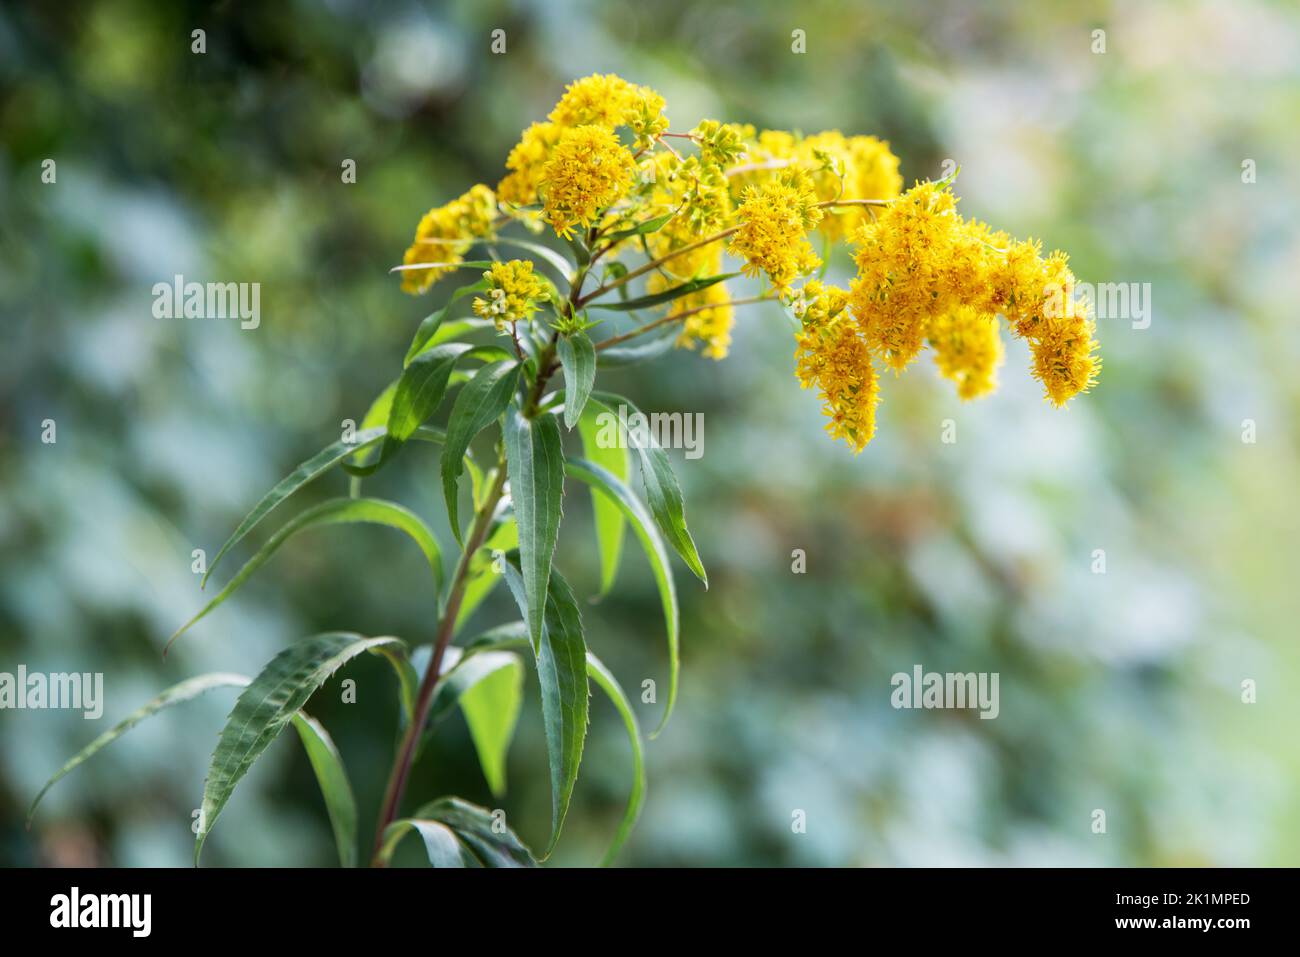 European goldenrod flowers  on green blurred background Stock Photo